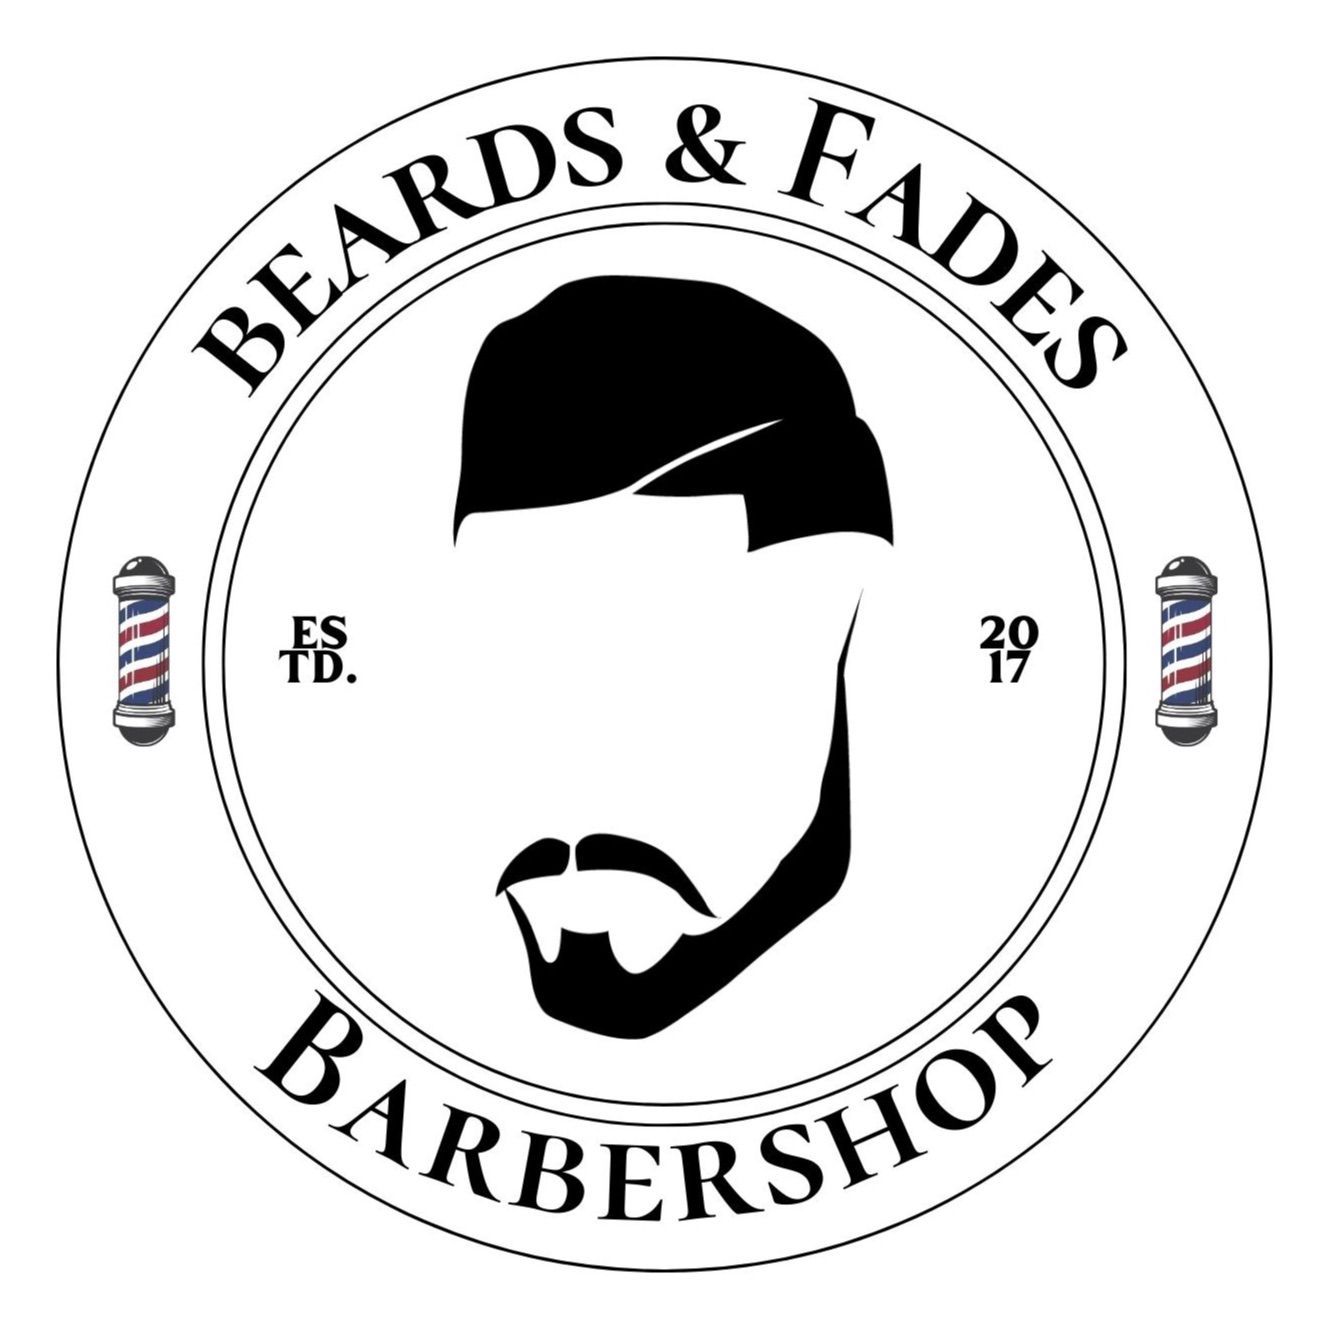 Beards & Fades Barbershop, 3729 Drennan Rd, Colorado Springs, 80910